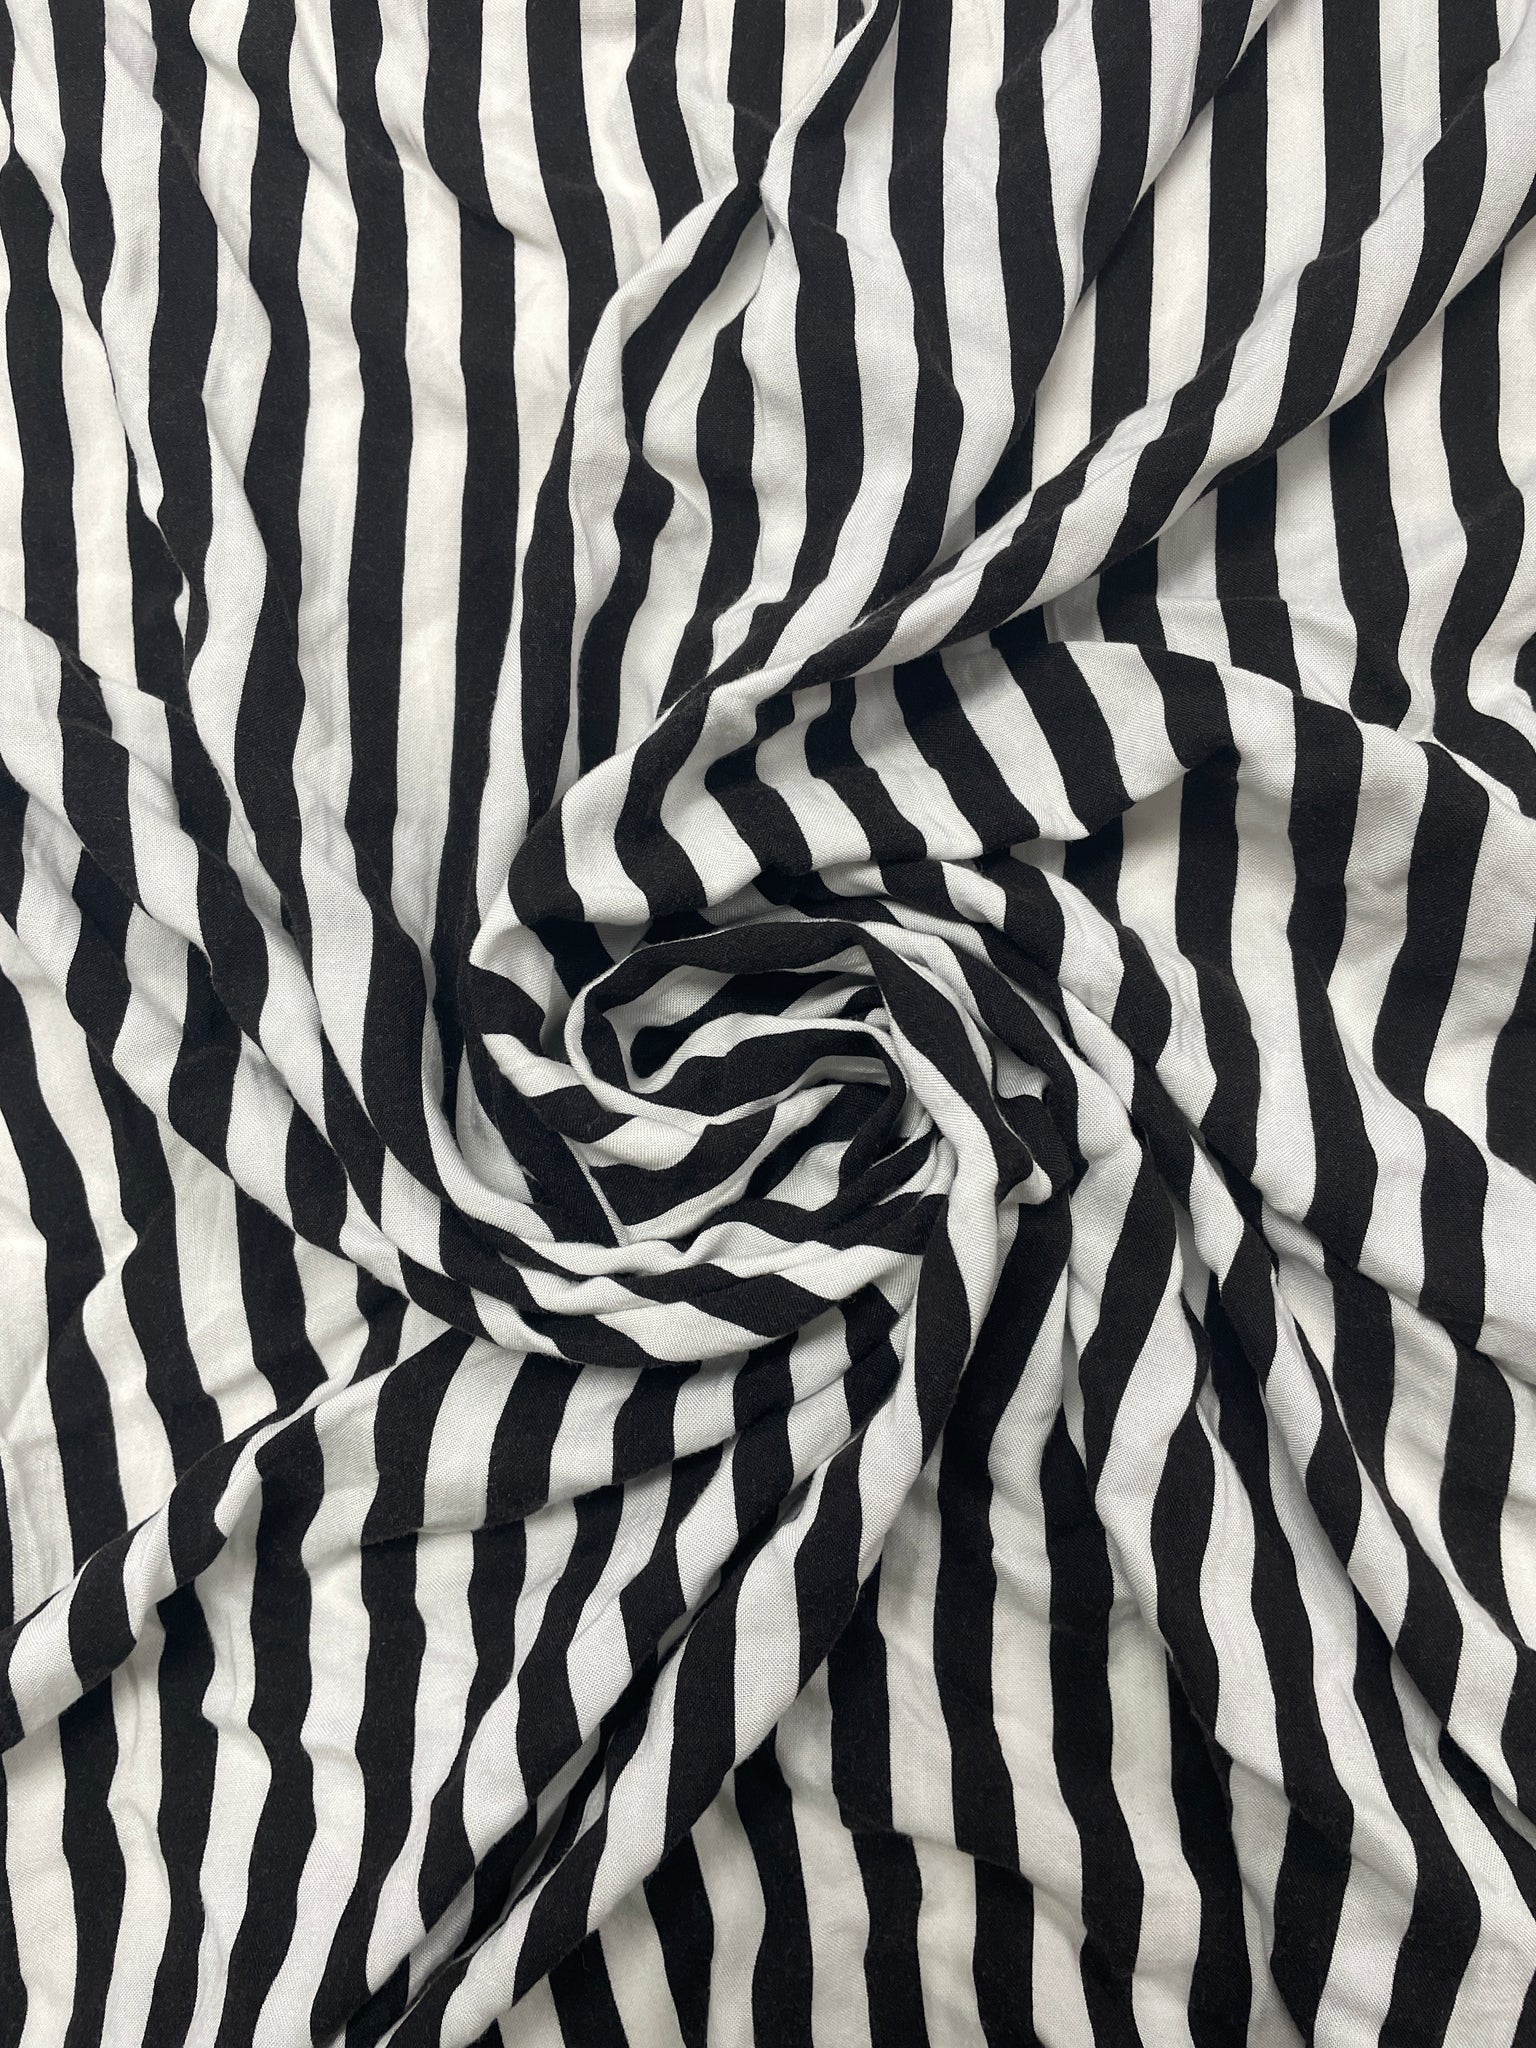 Rayon Printed Stripes - Black and White